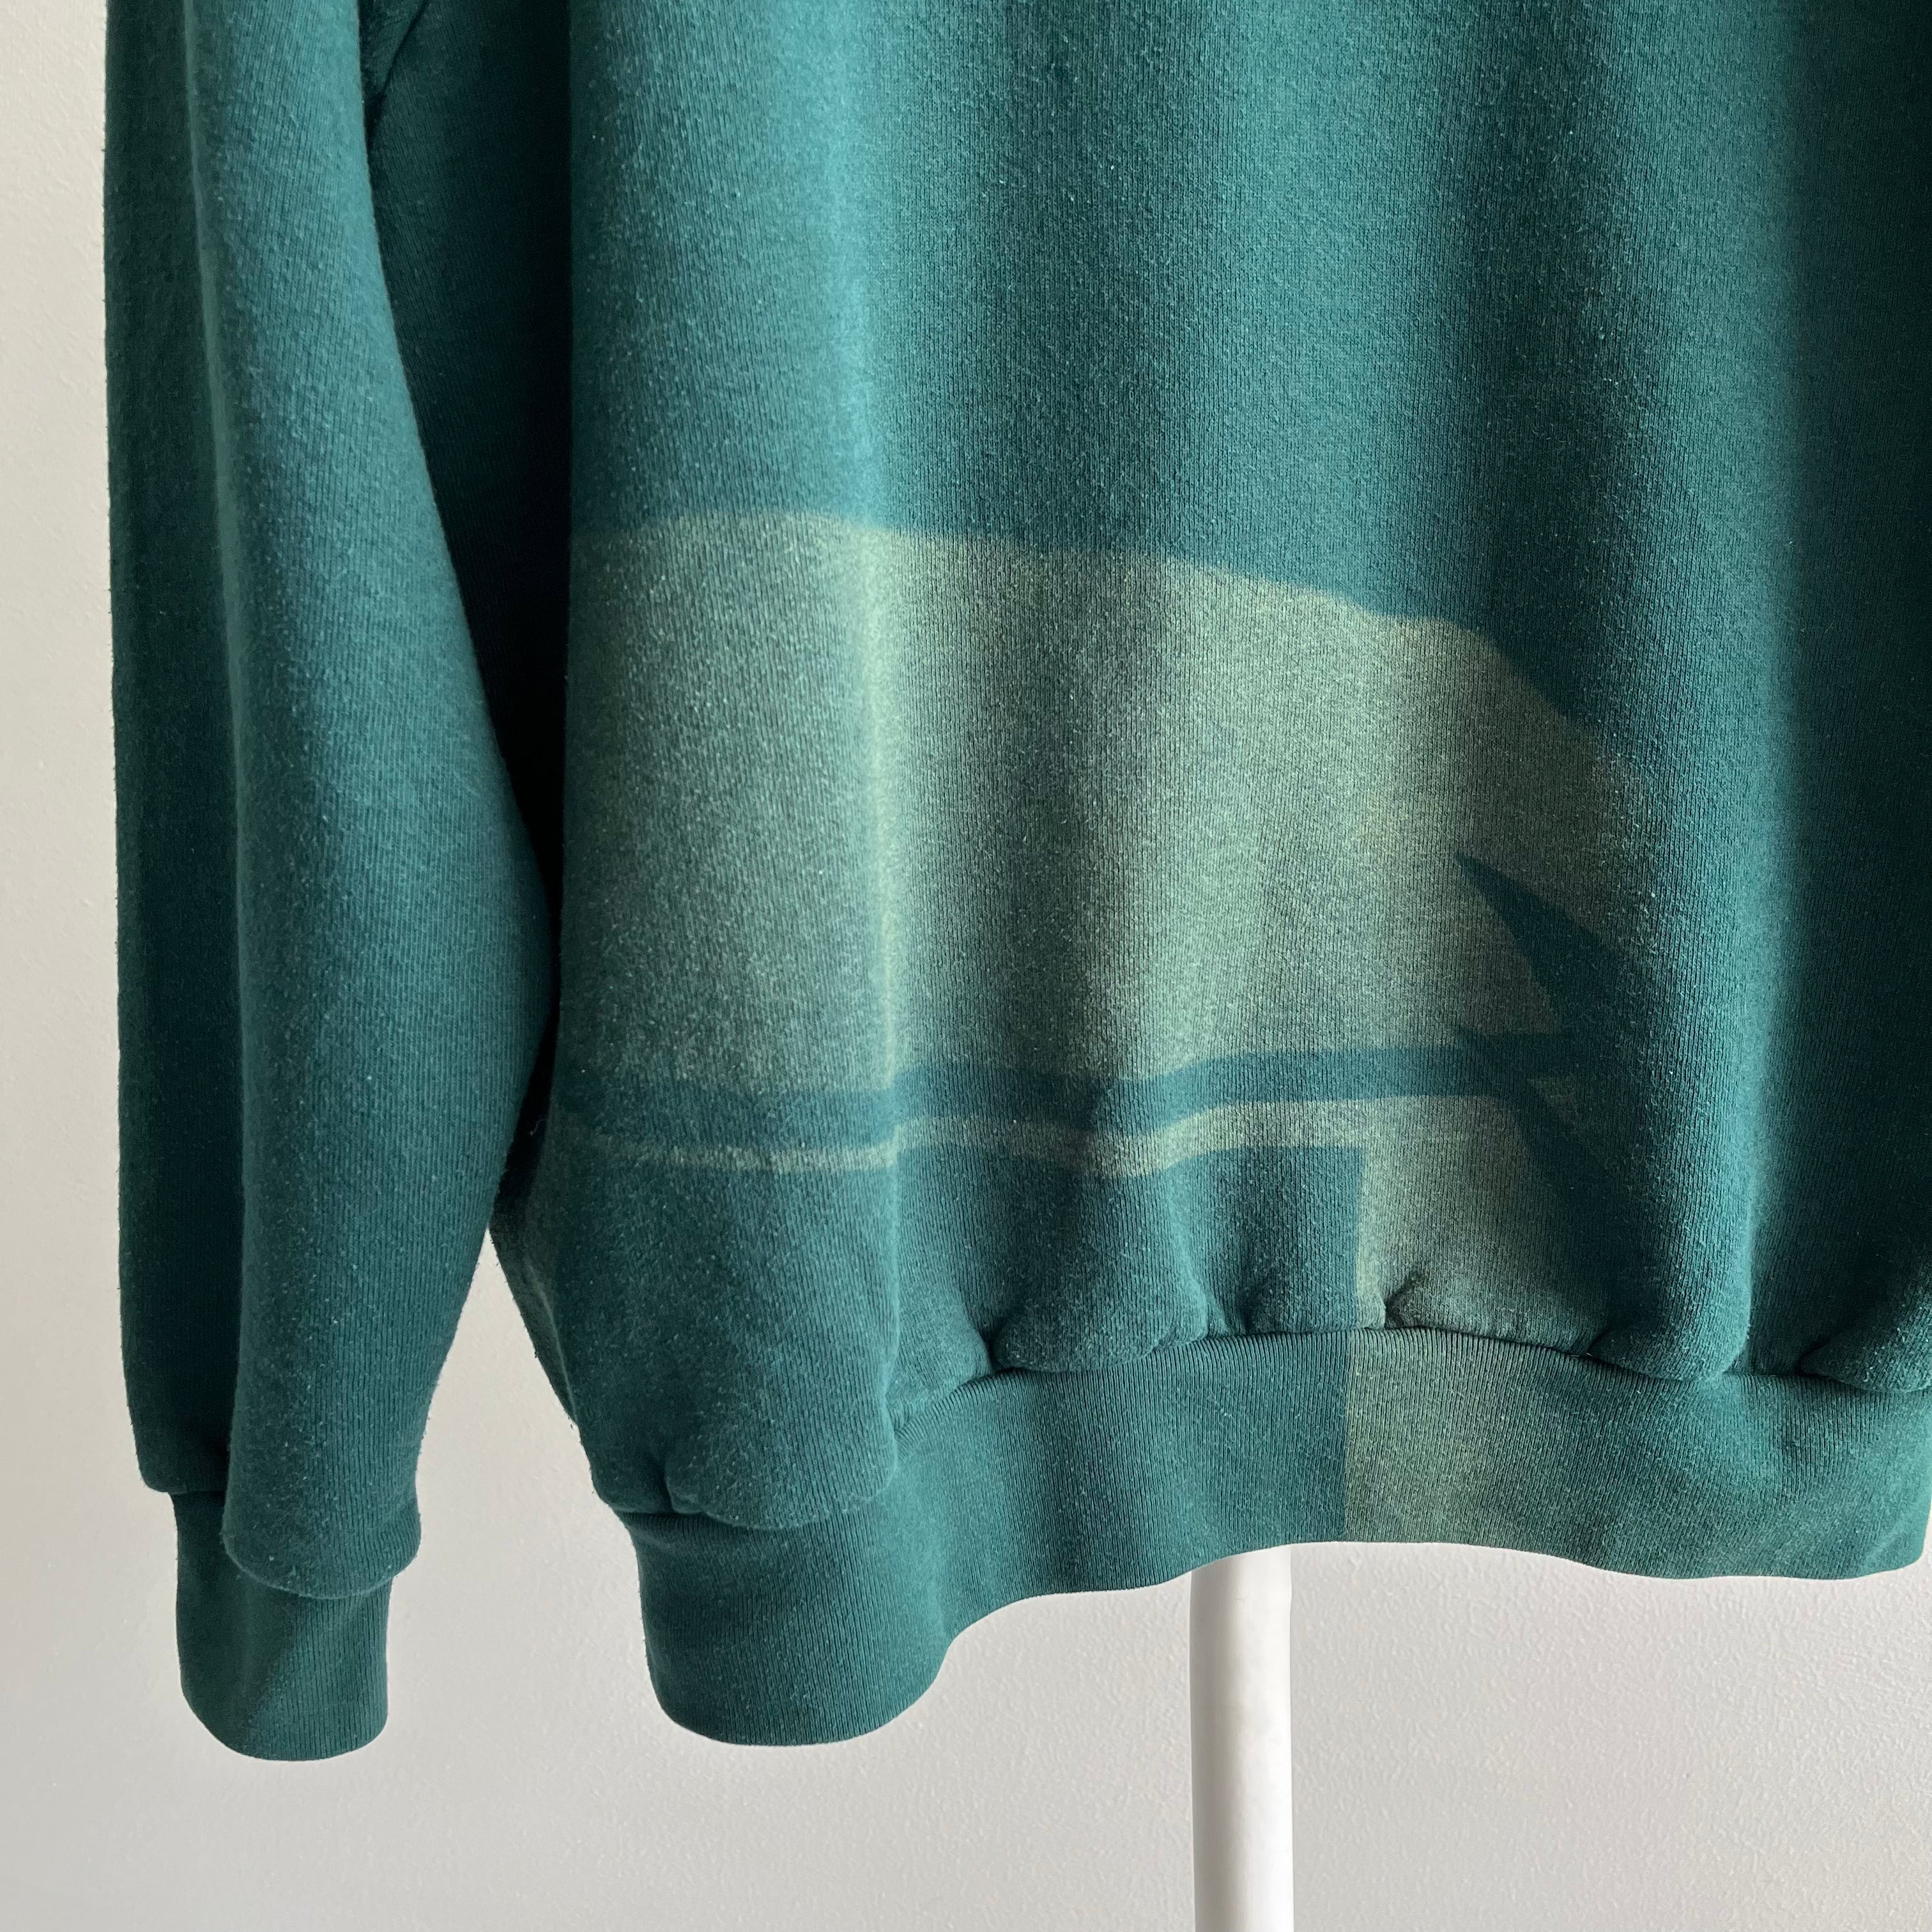 1990 KILLER COOL Faded Sweatshirt - WOWOWOW